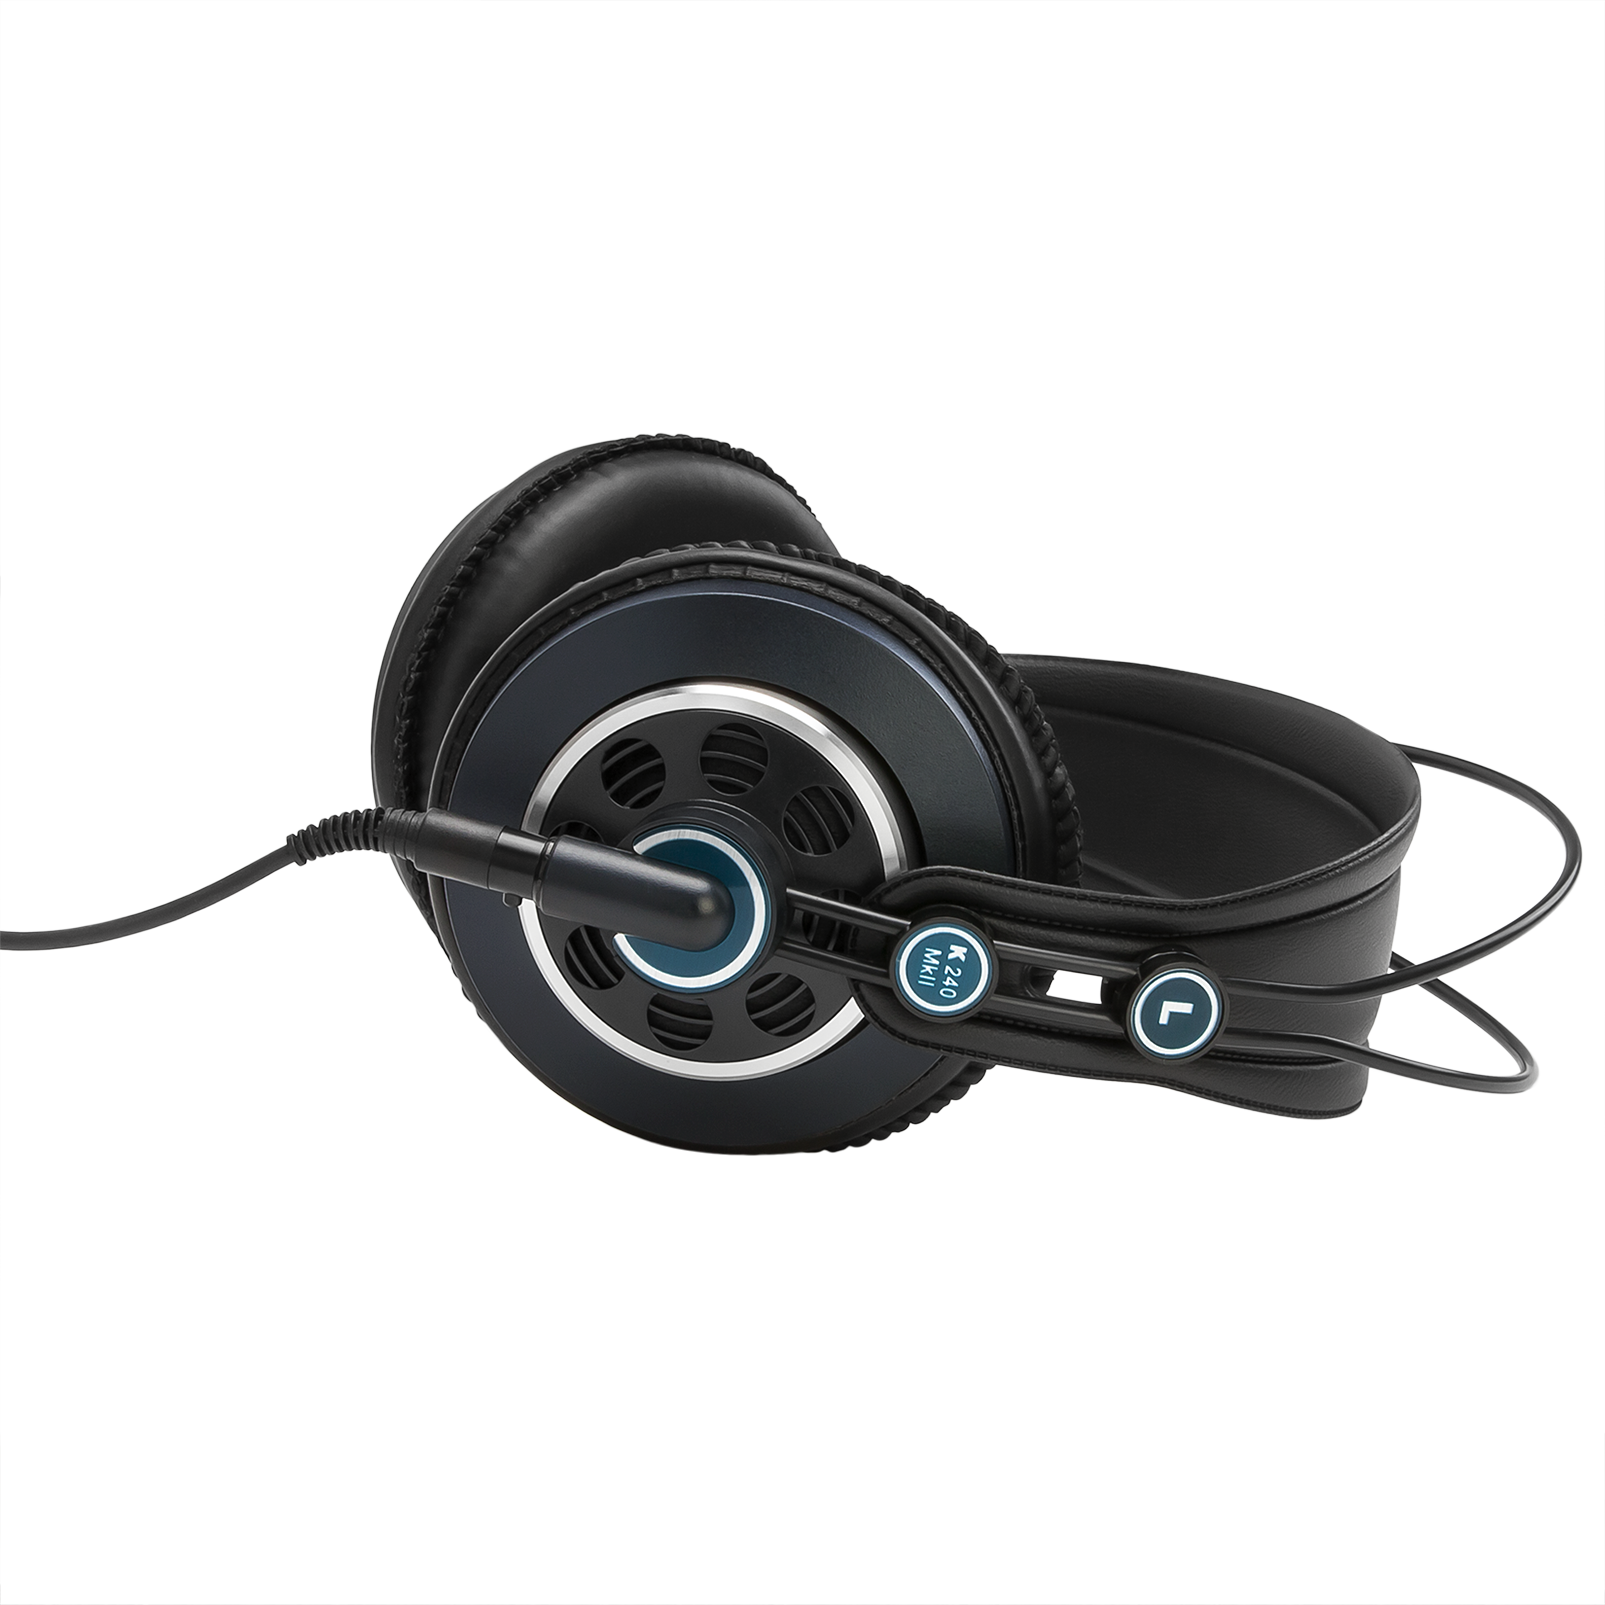 AKG Pro Audio K240 STUDIO Over-Ear, Semi-Open, Professional Studio  Headphones